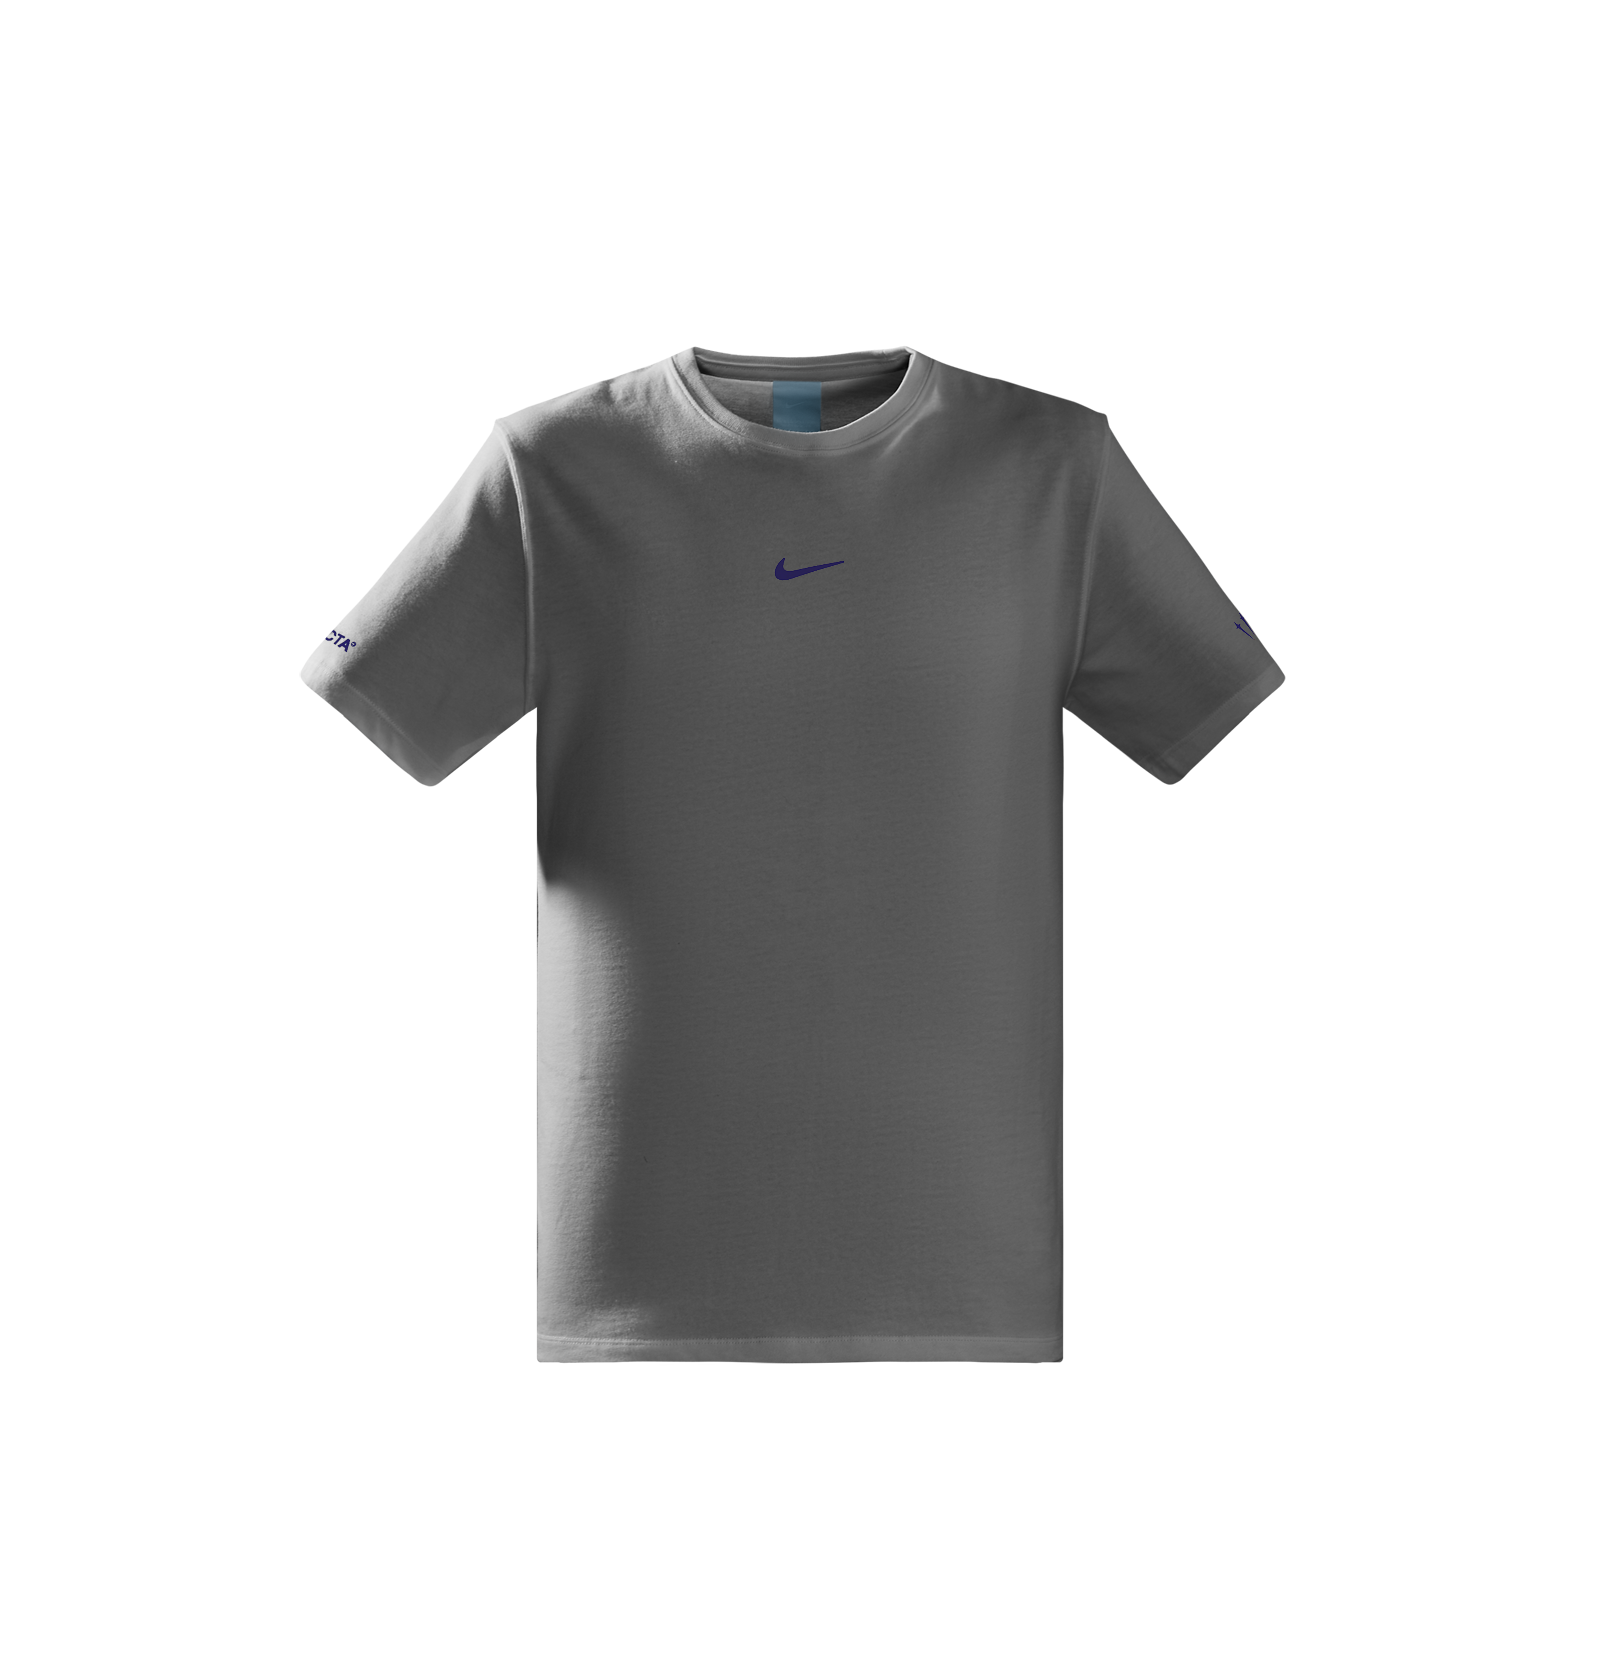 Nike Embroidered Middle Swoosh Logo Tee Unisex Size XS